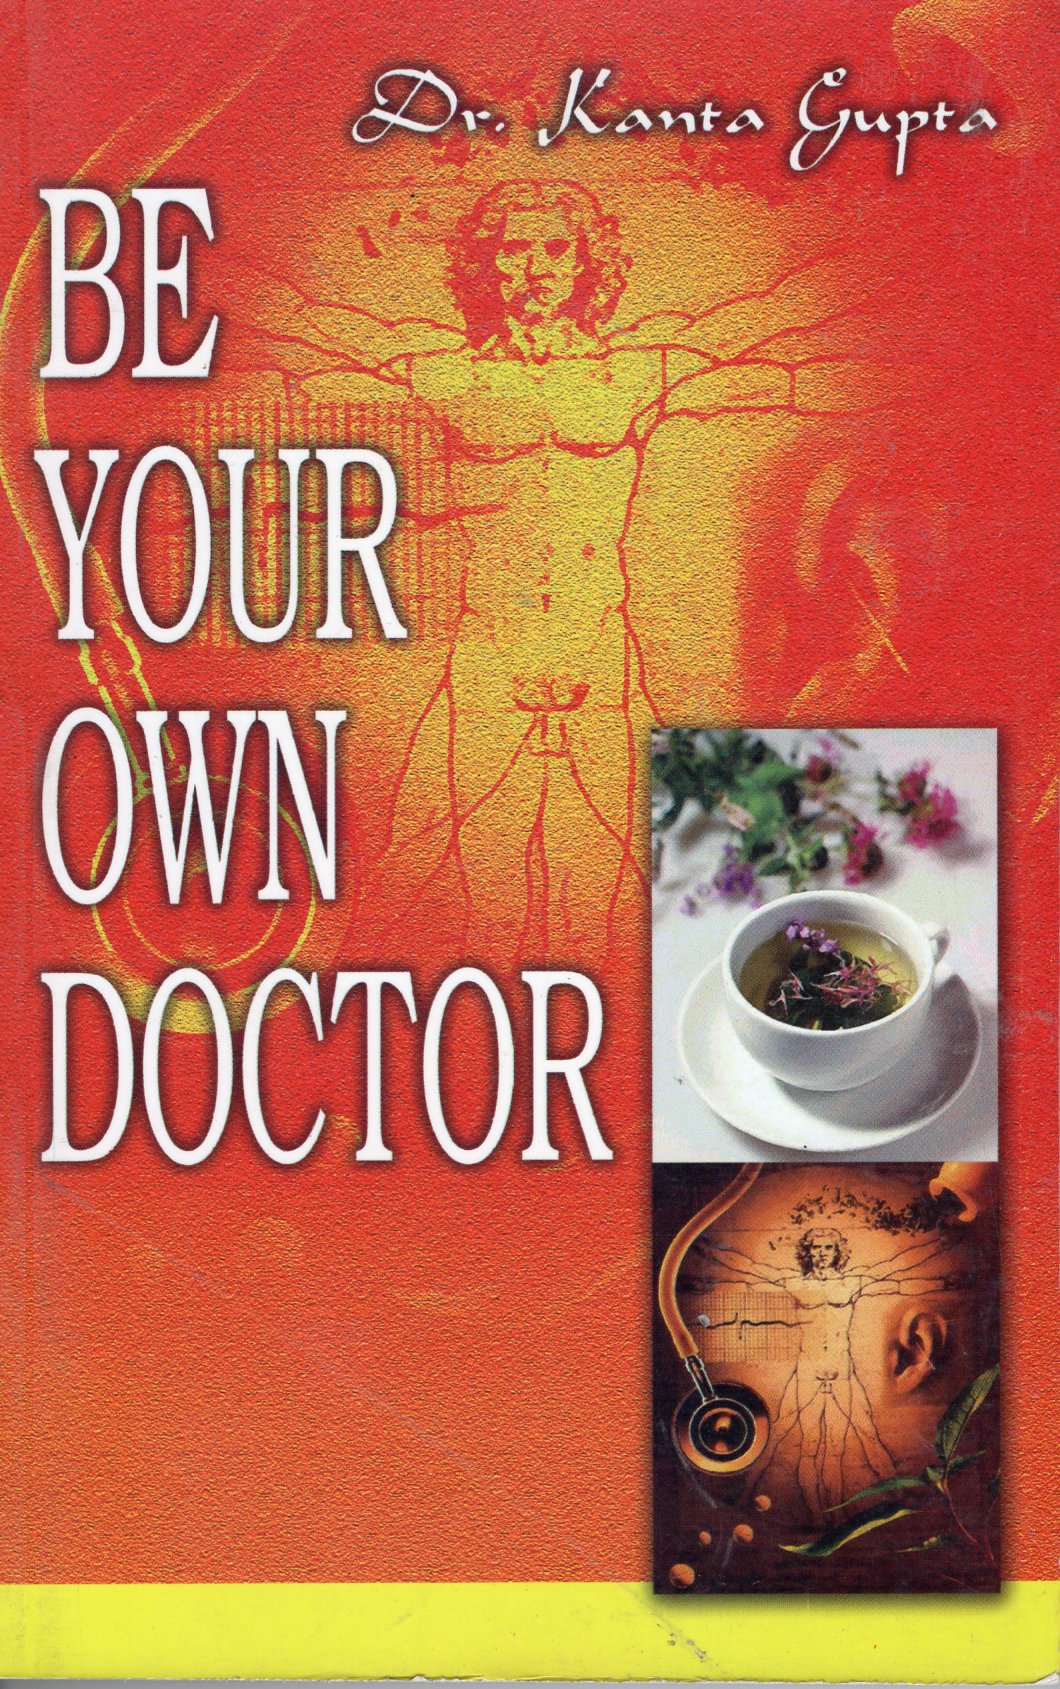 Be Your Own Doctor - Dr Kanta Gupta